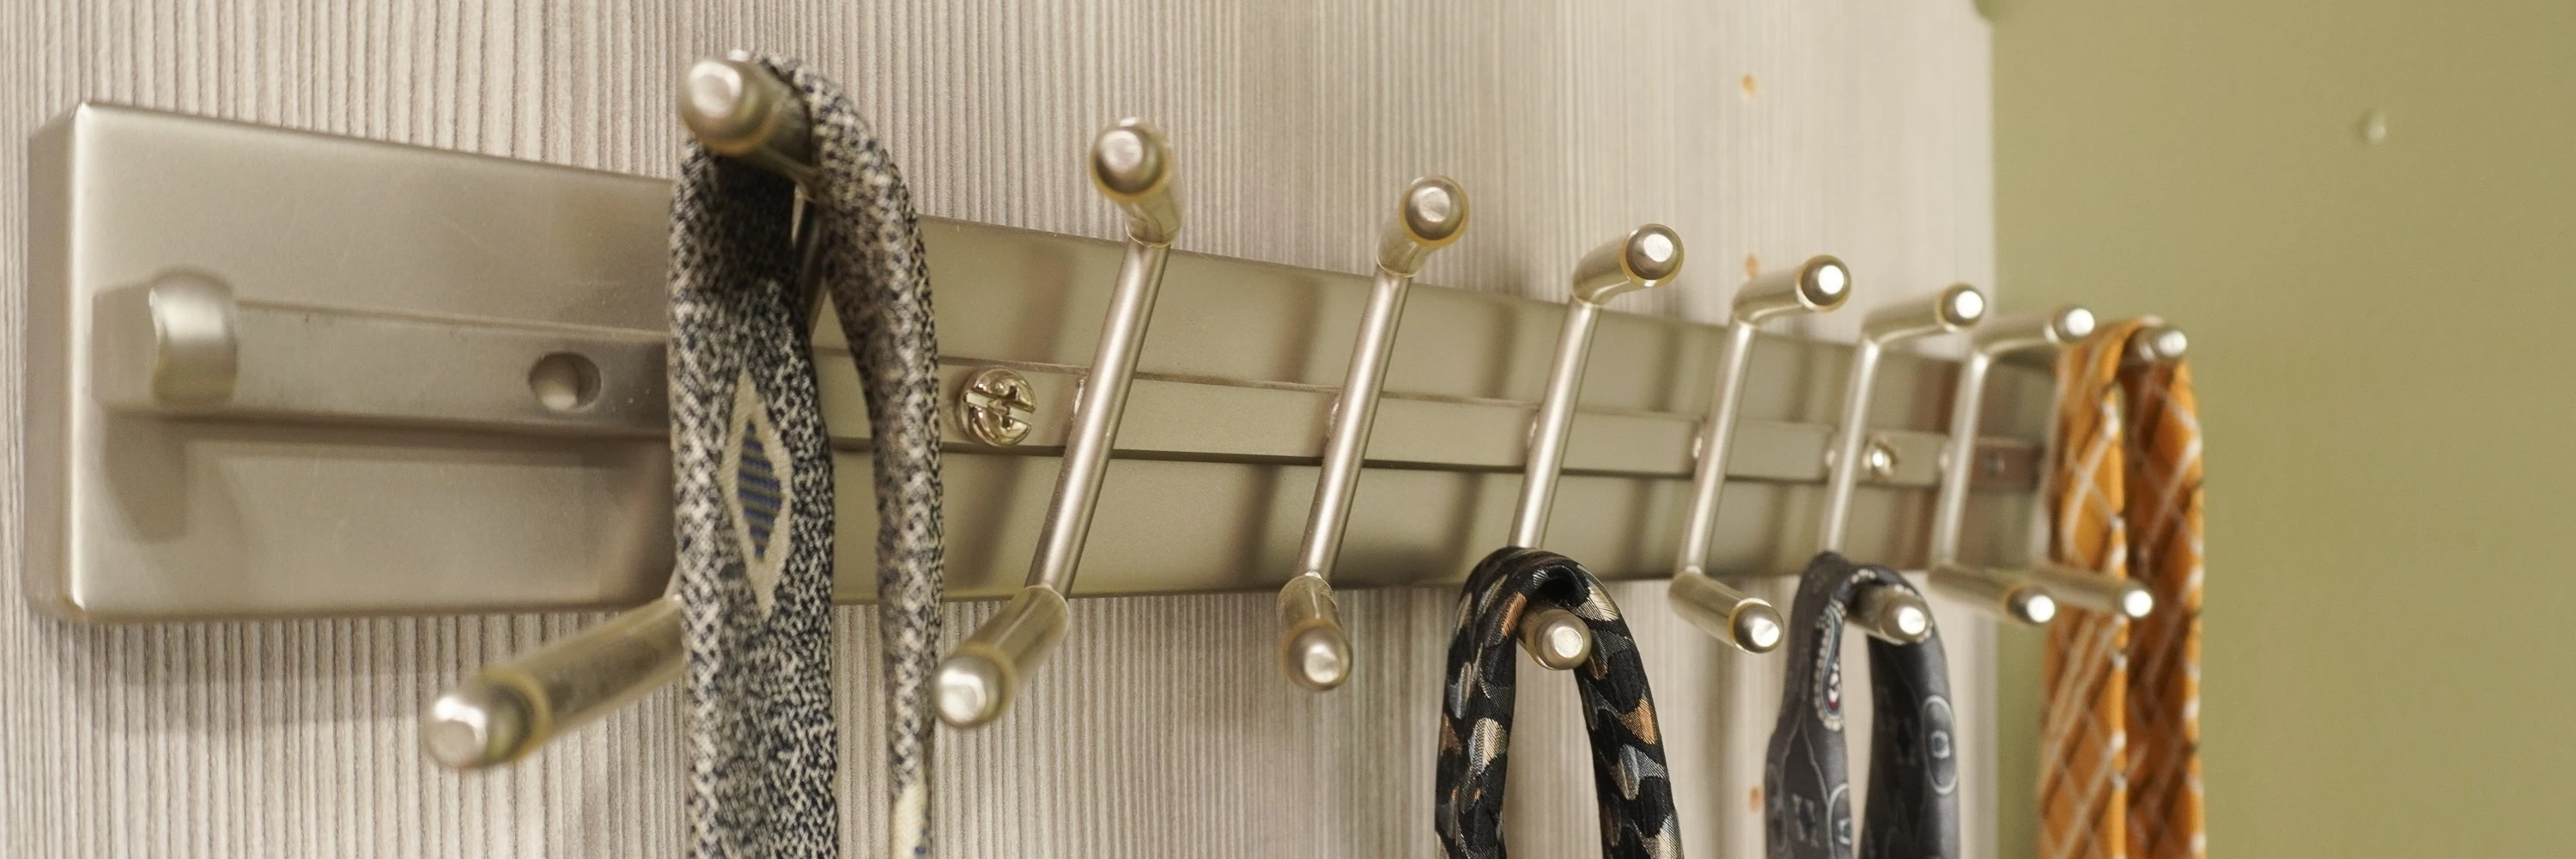 An image of Tie/Belt Racks & Valet Rod